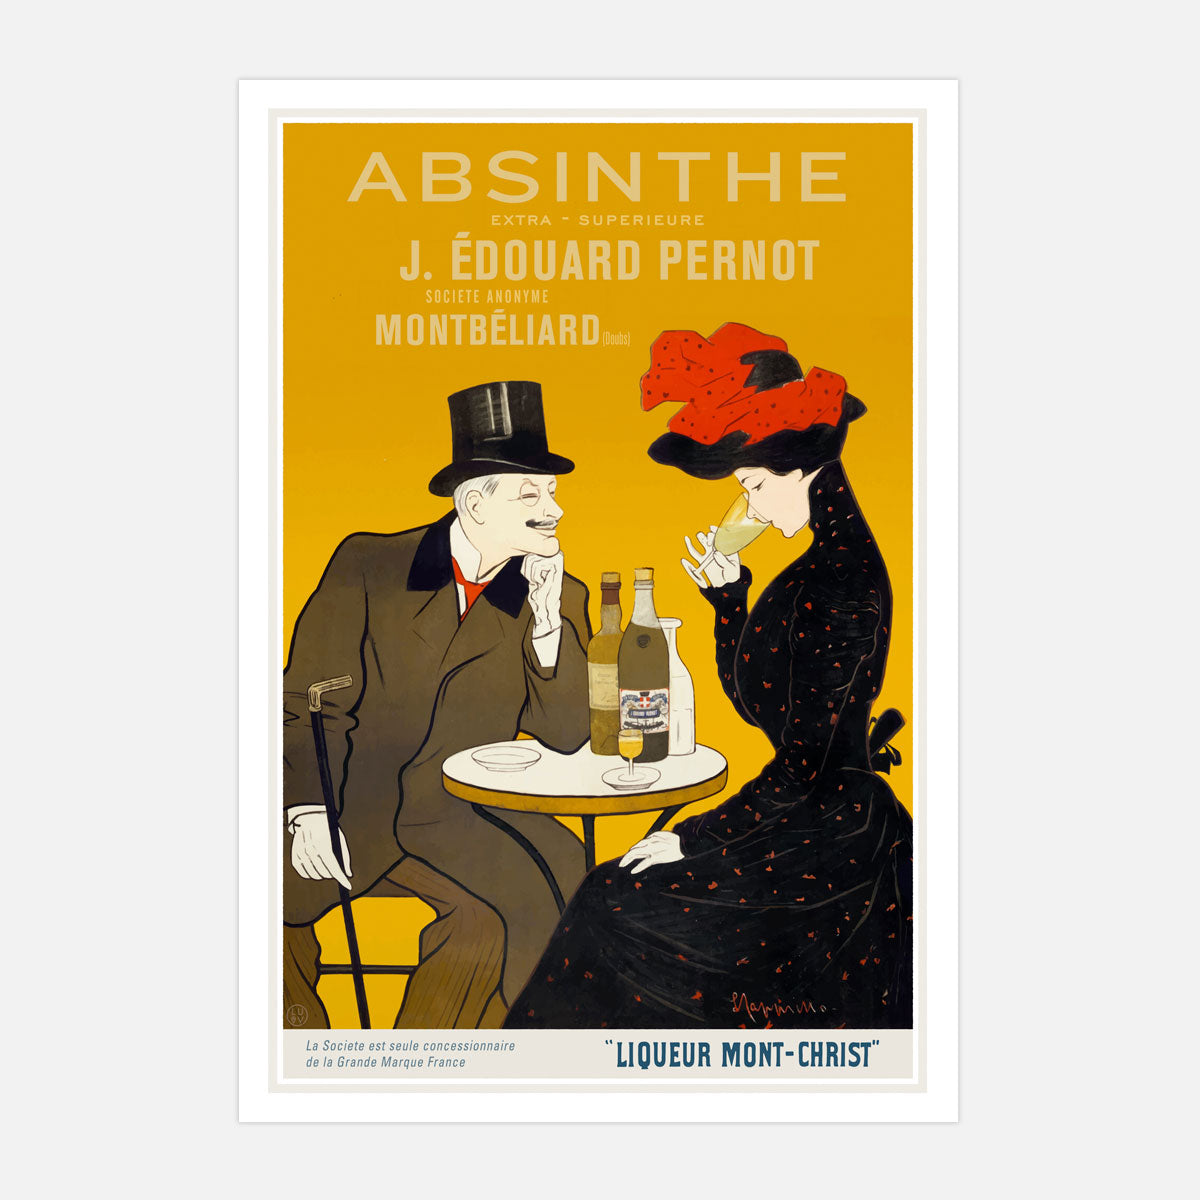 J Edouard Pernot retro vintage advertising poster - Places We Luv